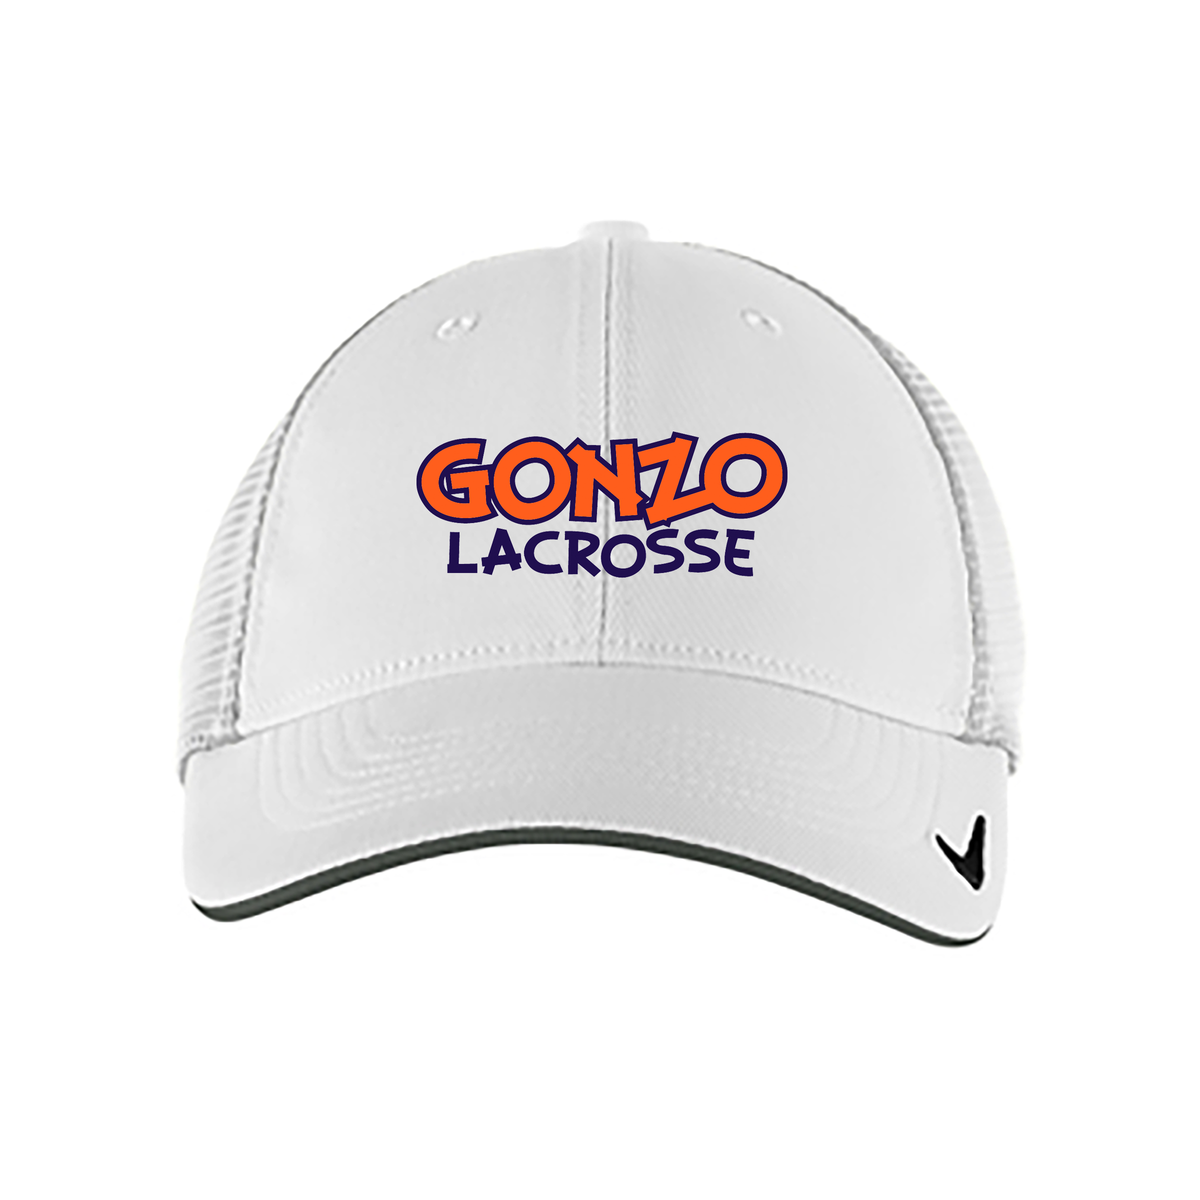 Gonzo Lacrosse Nike Dri-FIT Mesh Cap